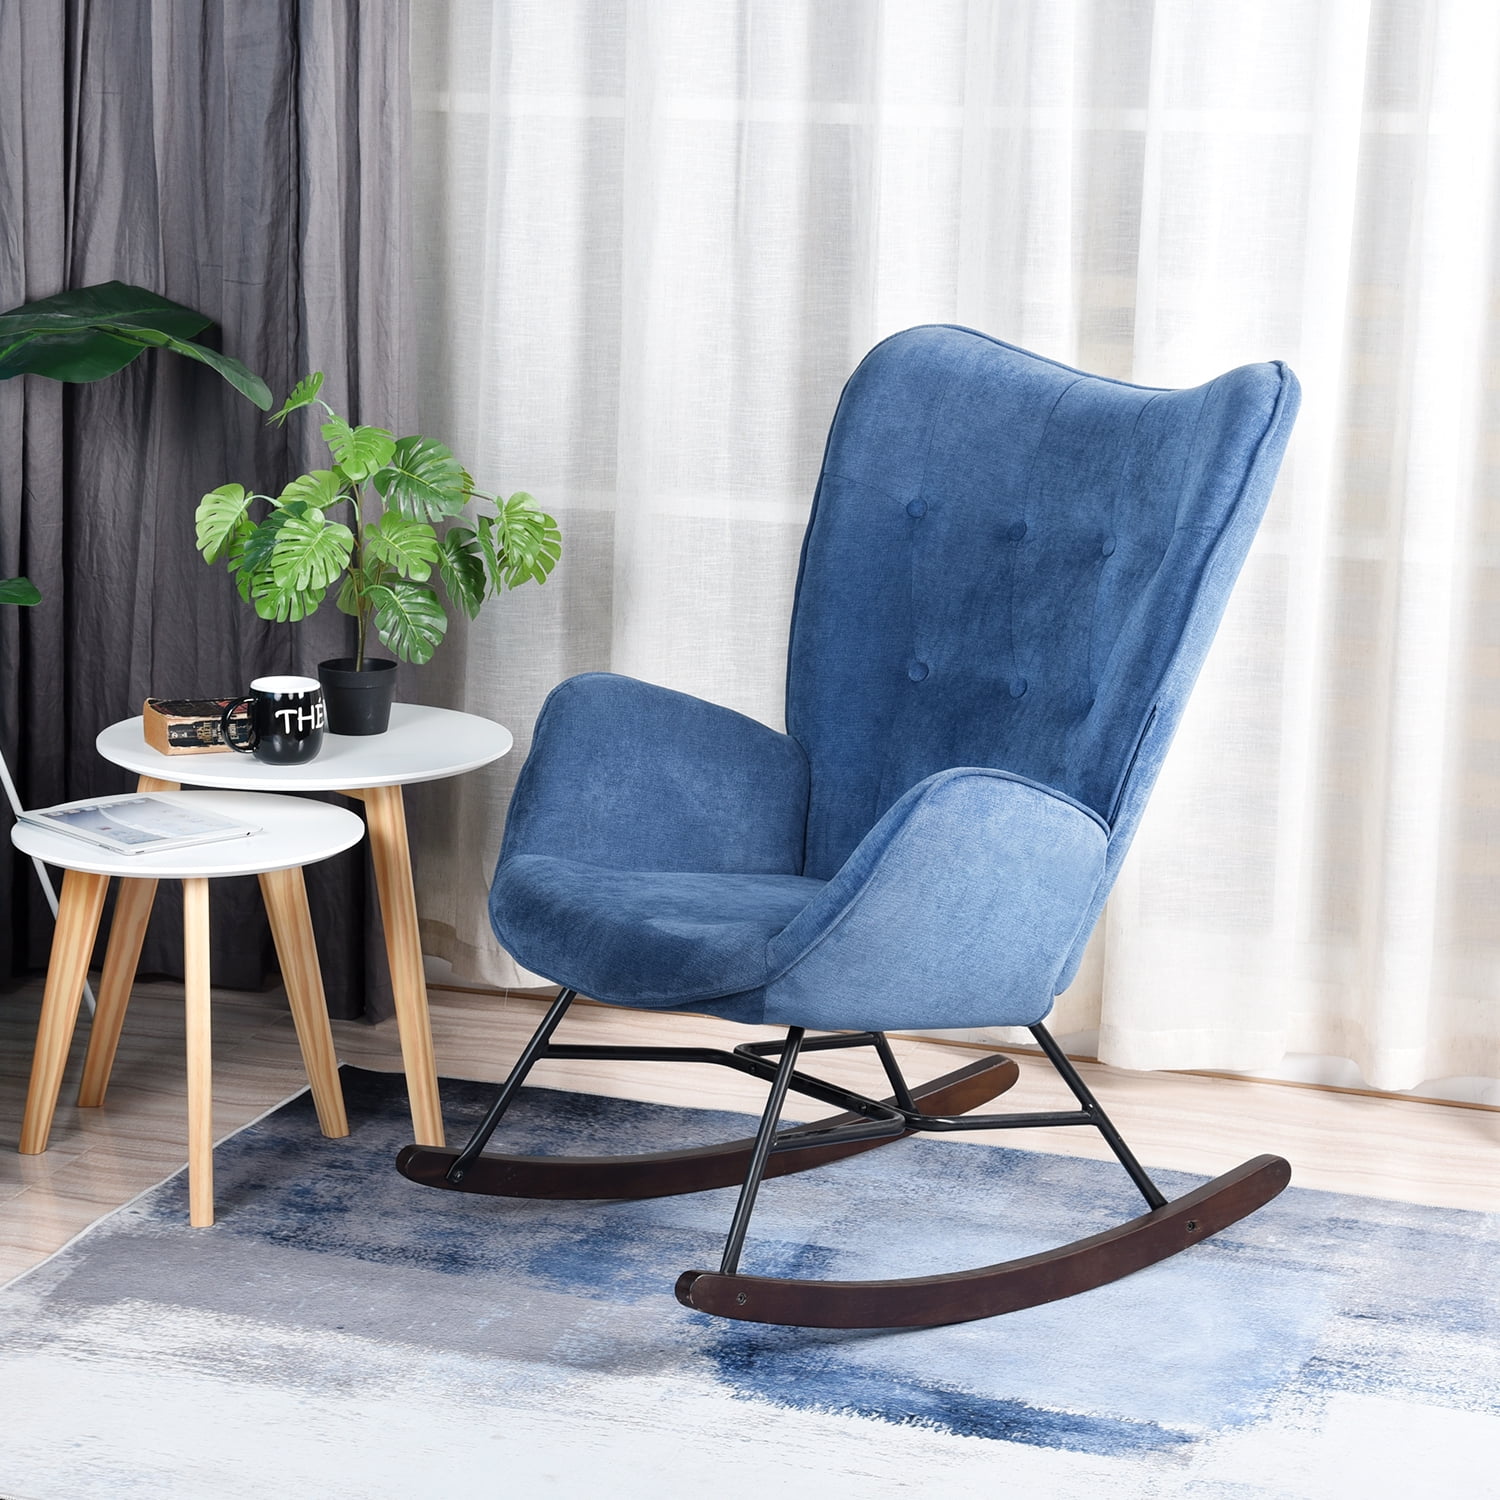 Chair, Leasuires chairs Velvet Blue Rocking chair, Modern